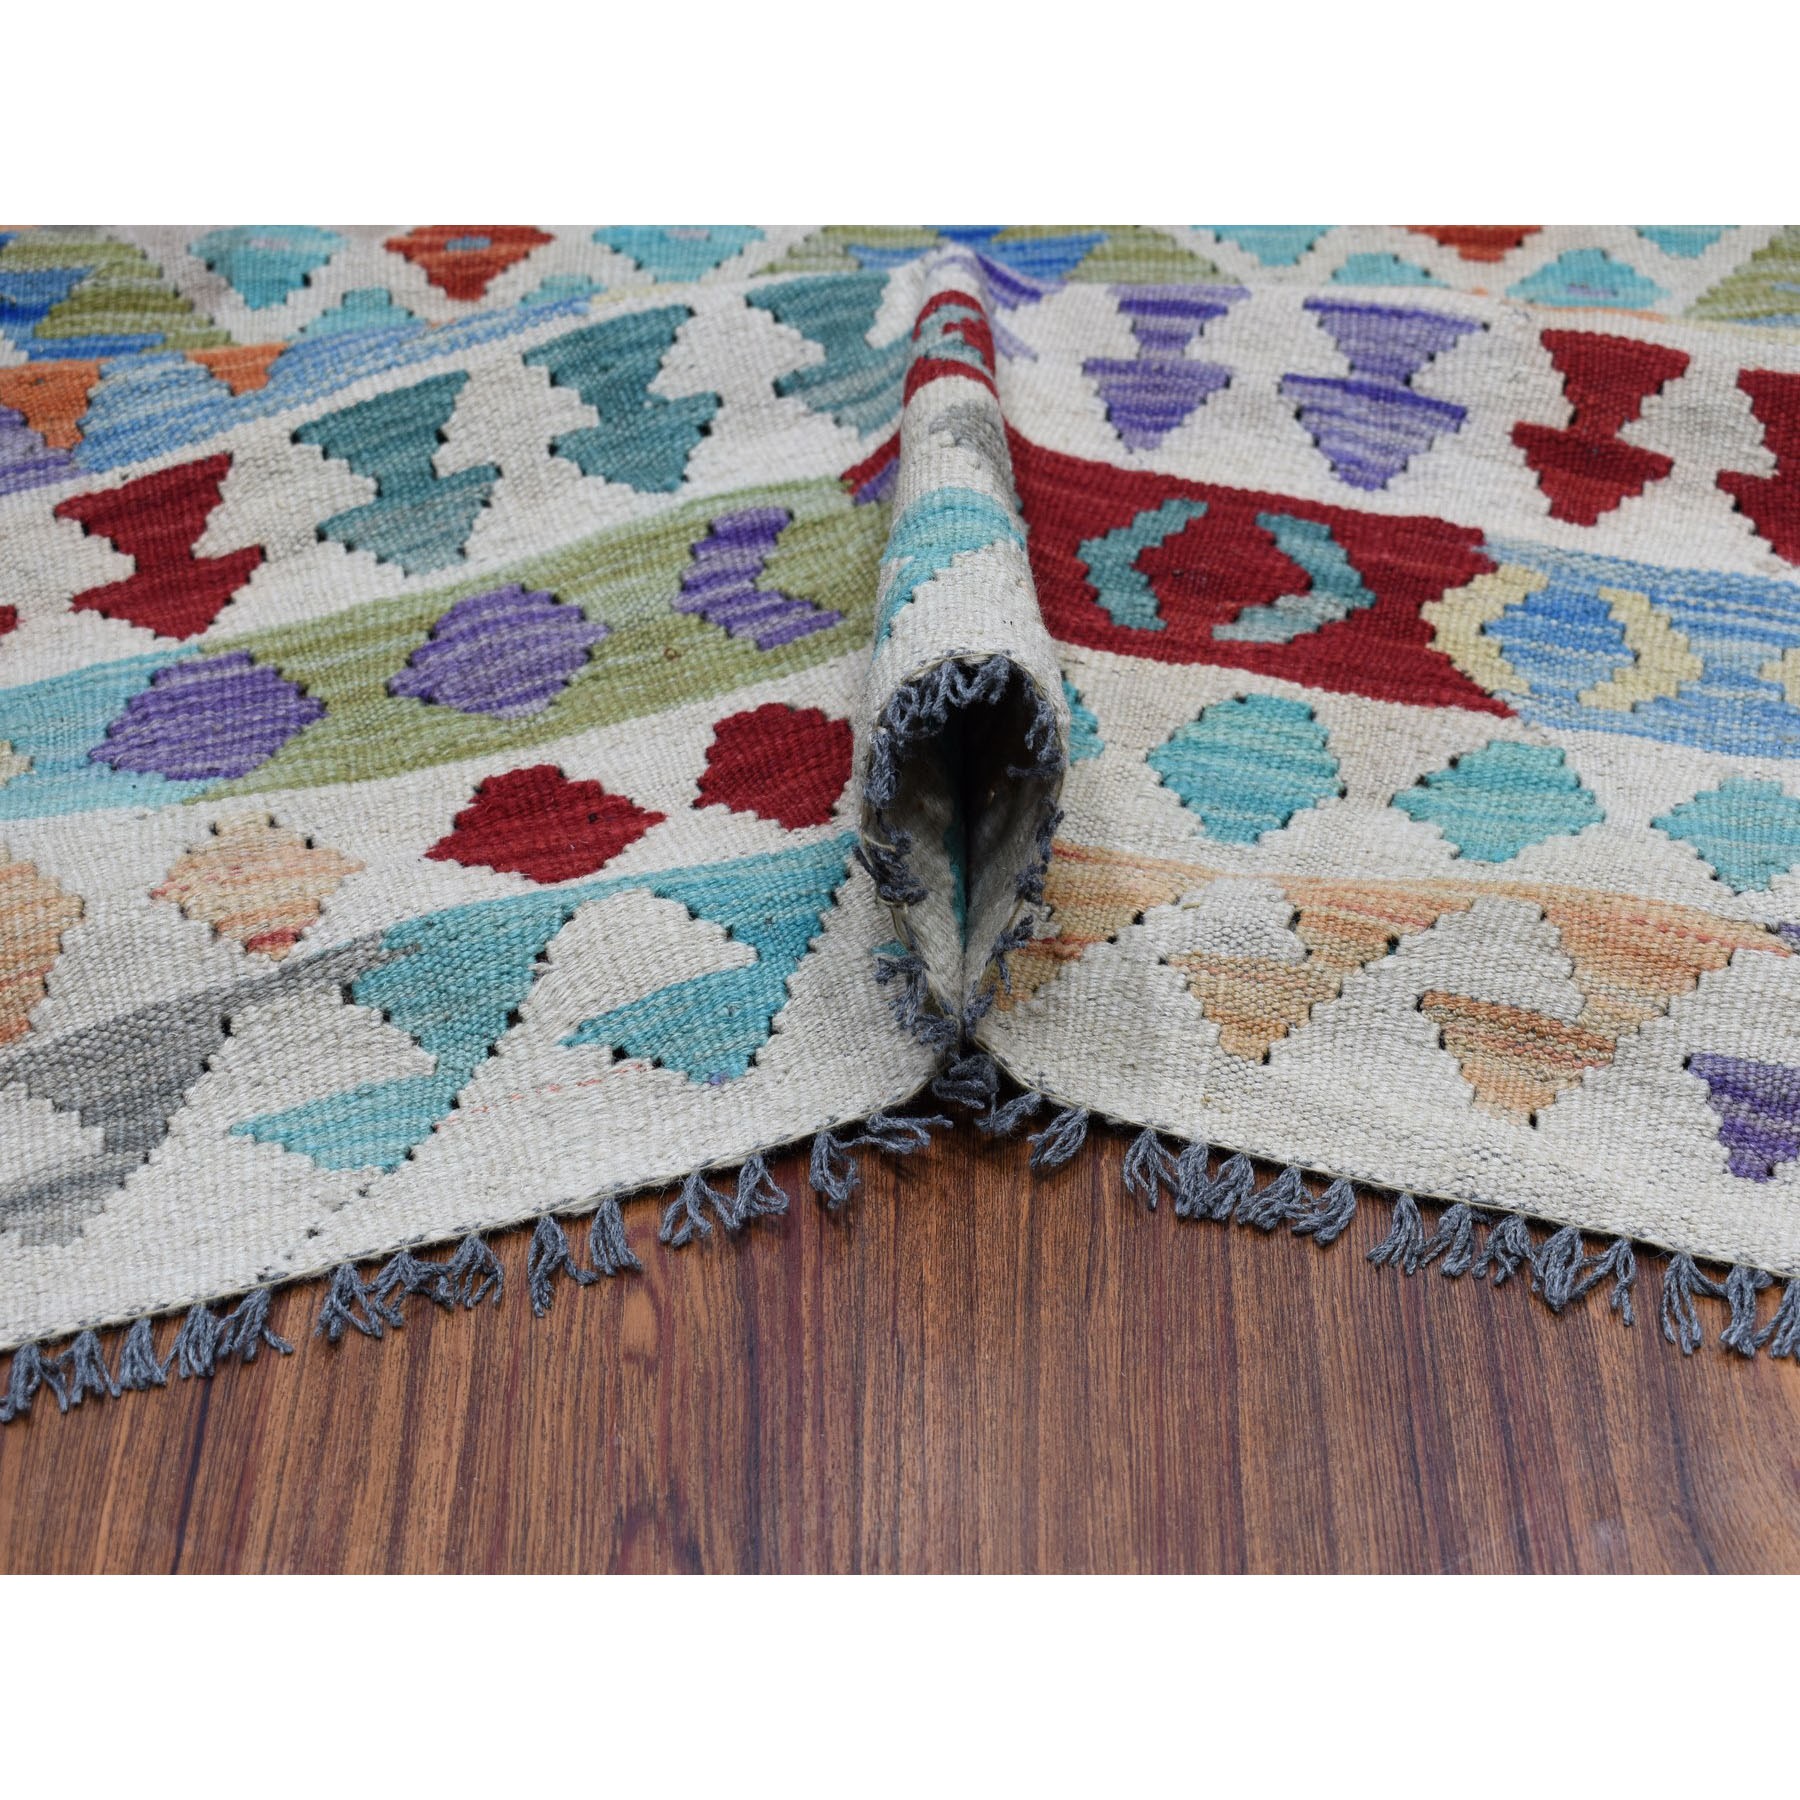 8-7 x11-8  Colorful Afghan Kilim Pure Wool Hand Woven Oriental Rug 